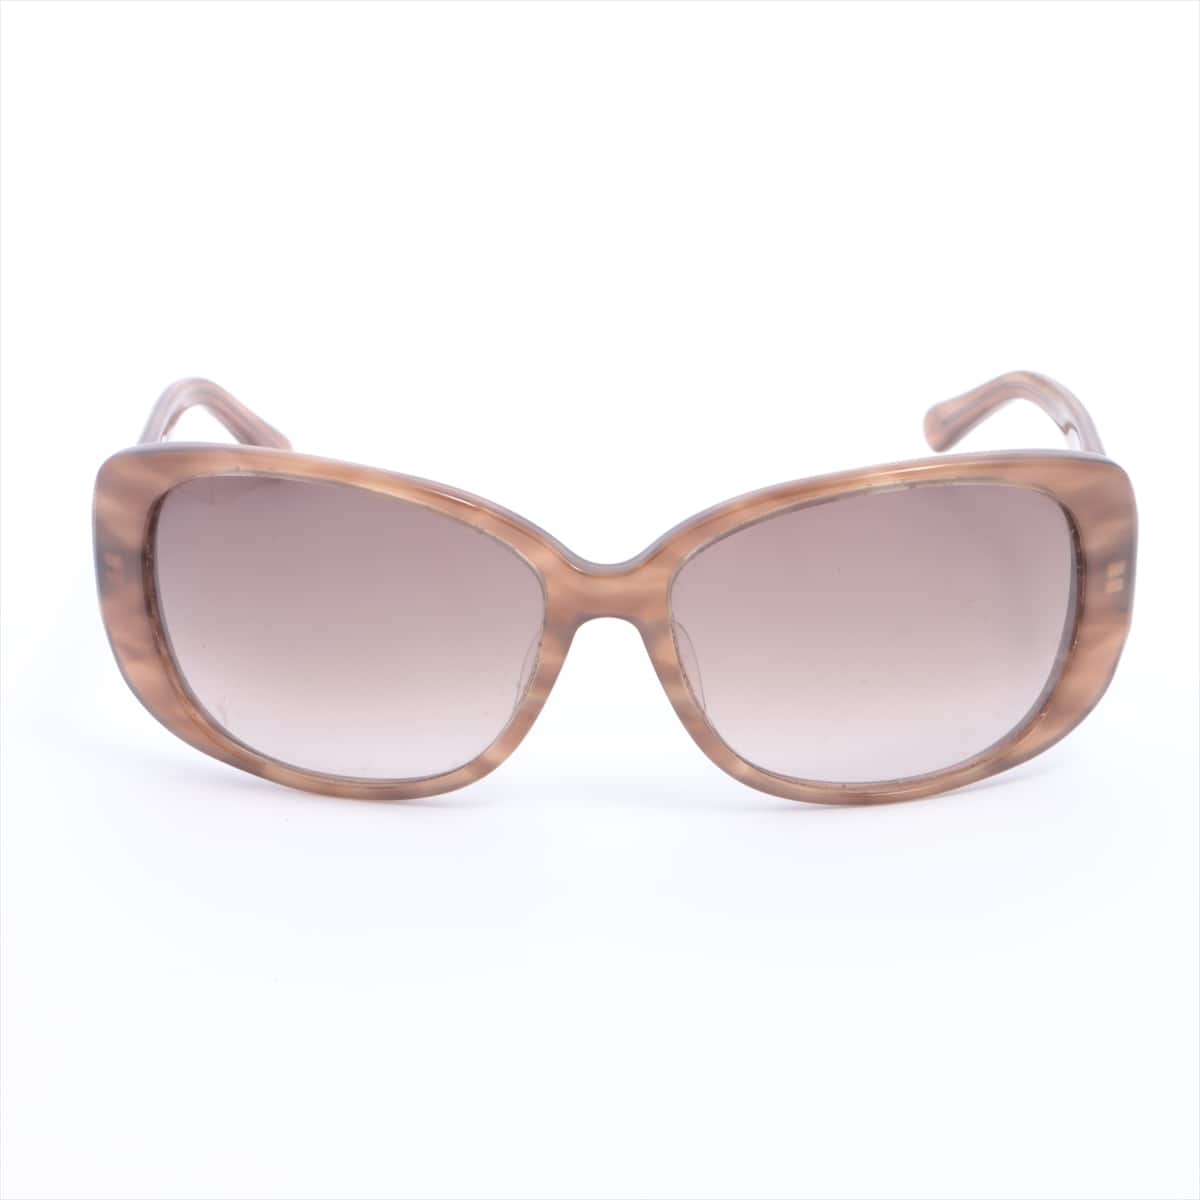 Prada Sunglasses Plastic Brown